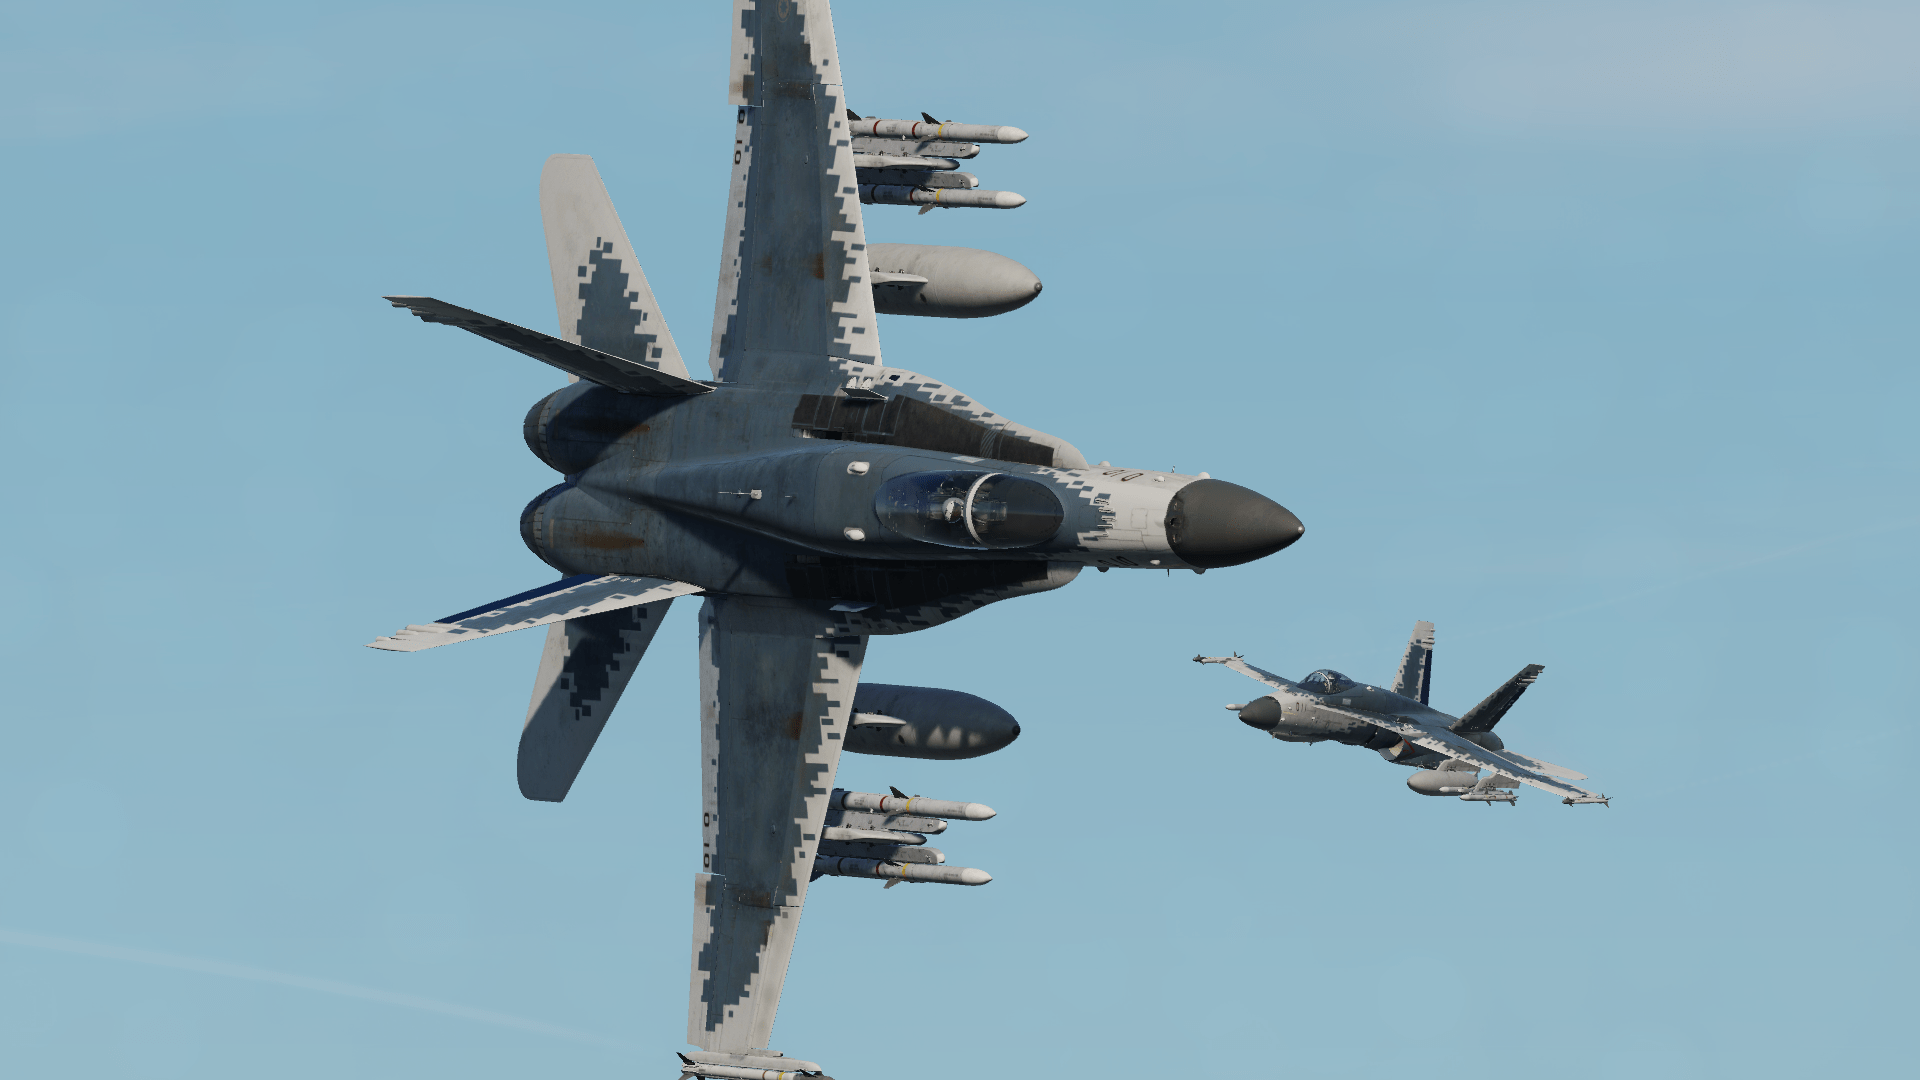 Digital AirForce Fictional F-18 "Aggressor"